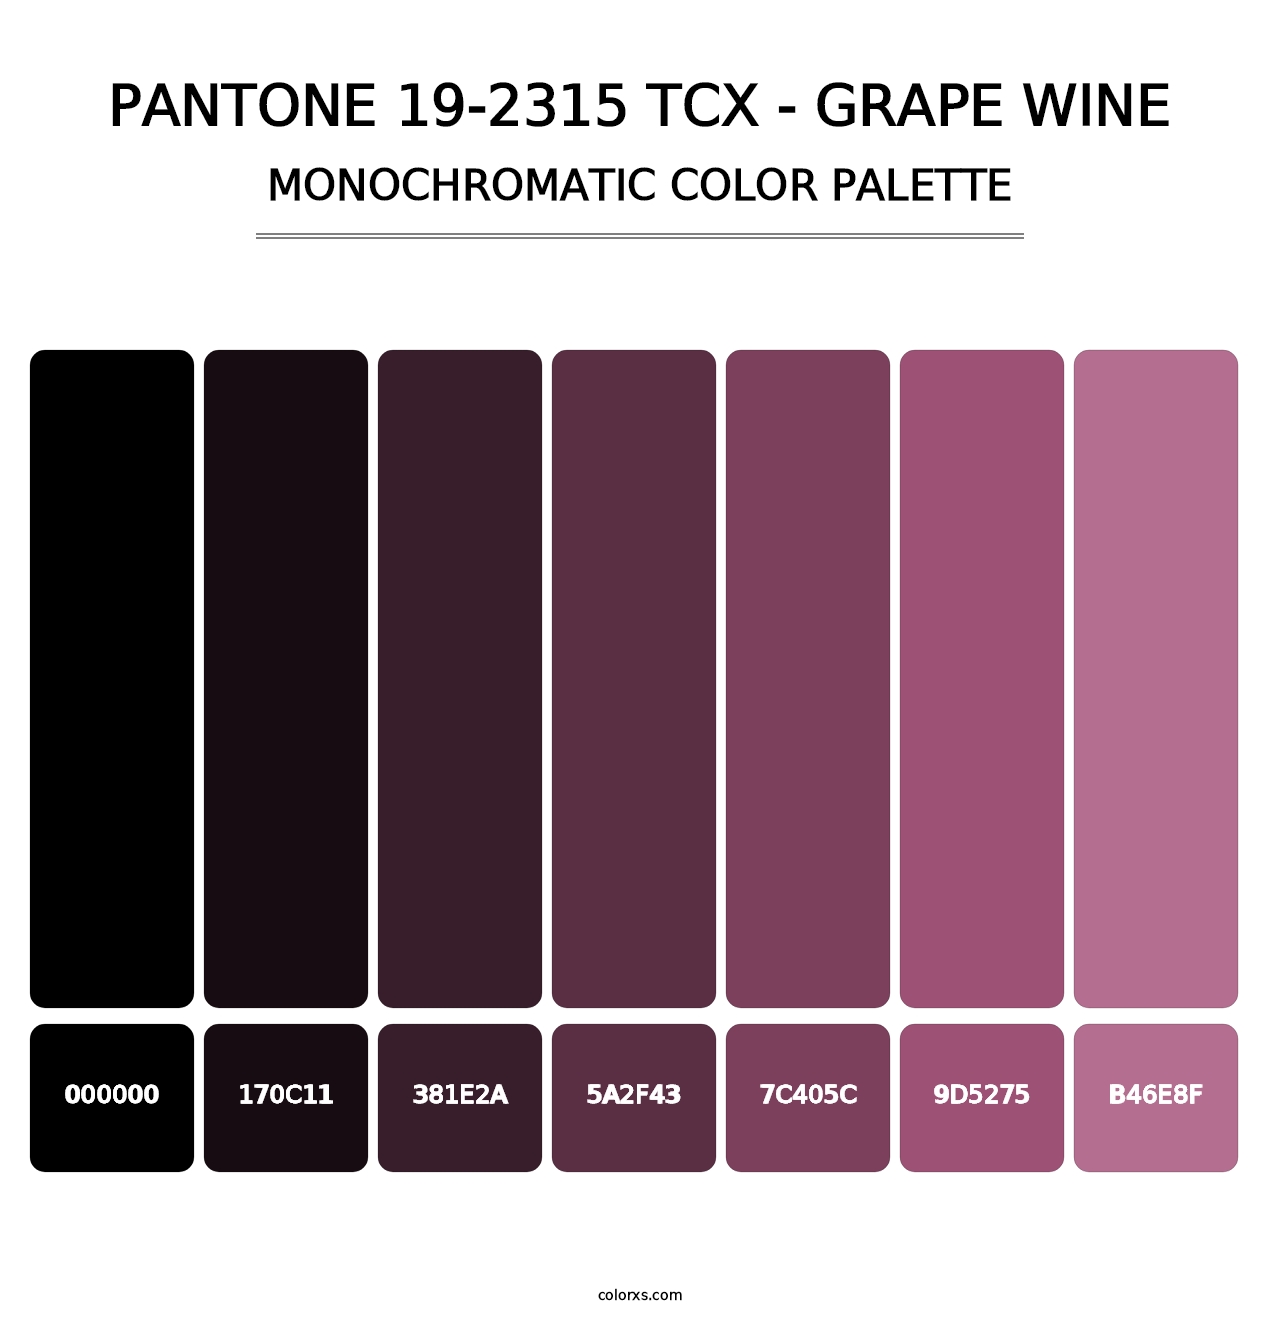 PANTONE 19-2315 TCX - Grape Wine - Monochromatic Color Palette